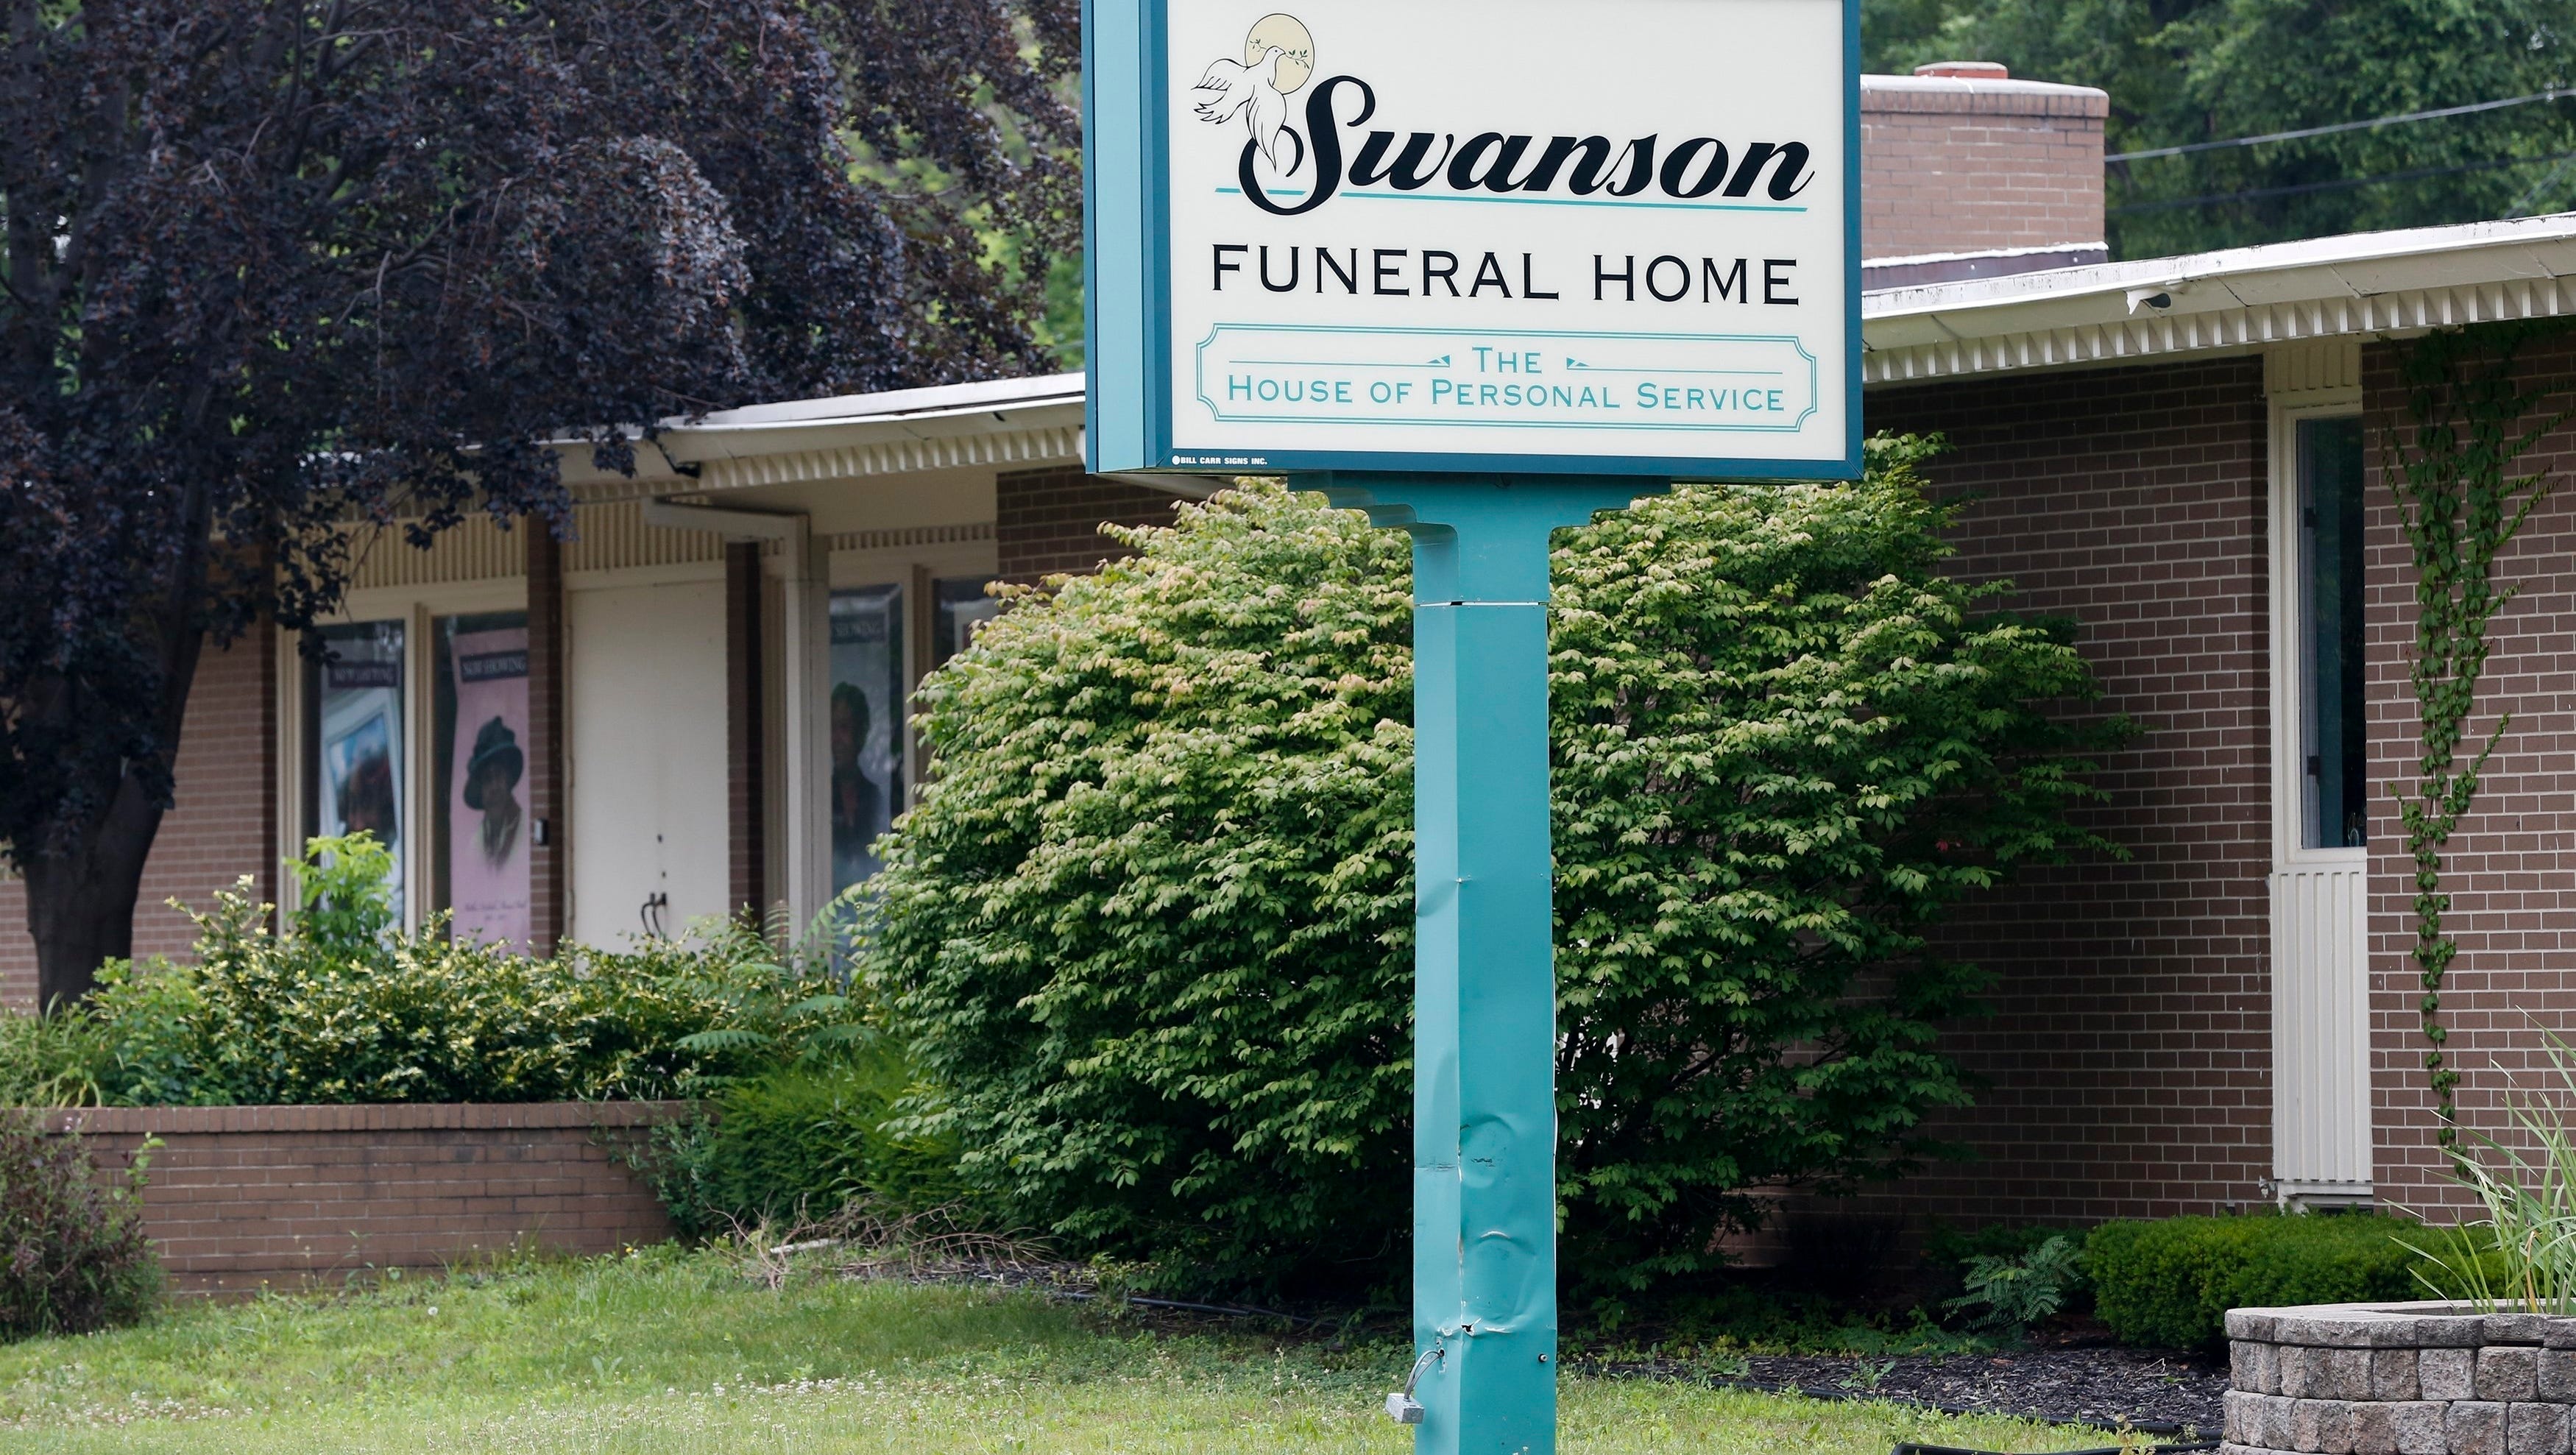 garden city michigan funeral homes